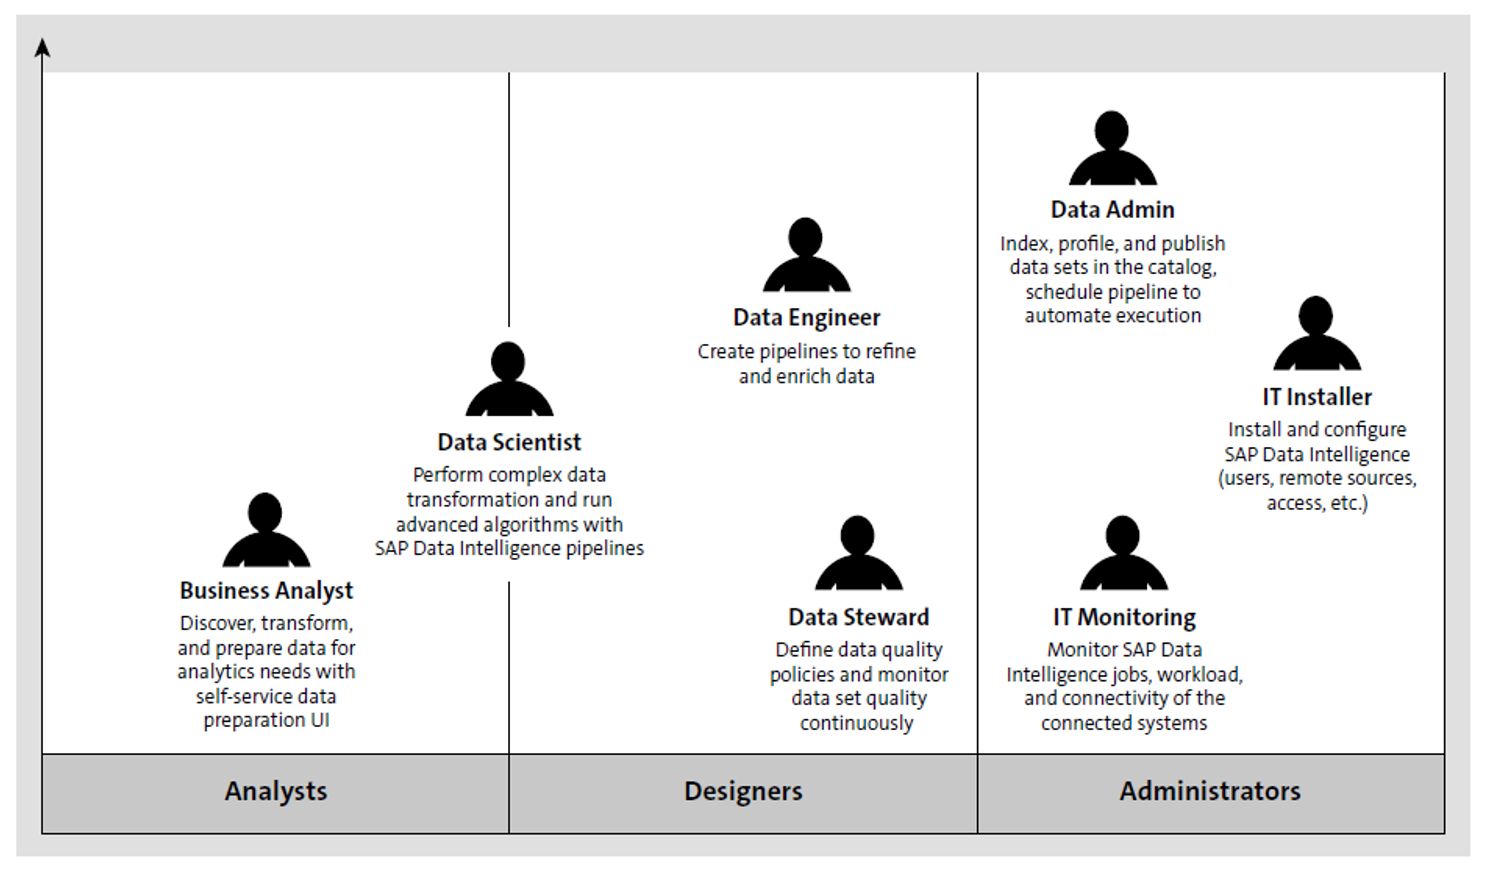 Persona-Based Usage of SAP Data Intelligence Applications